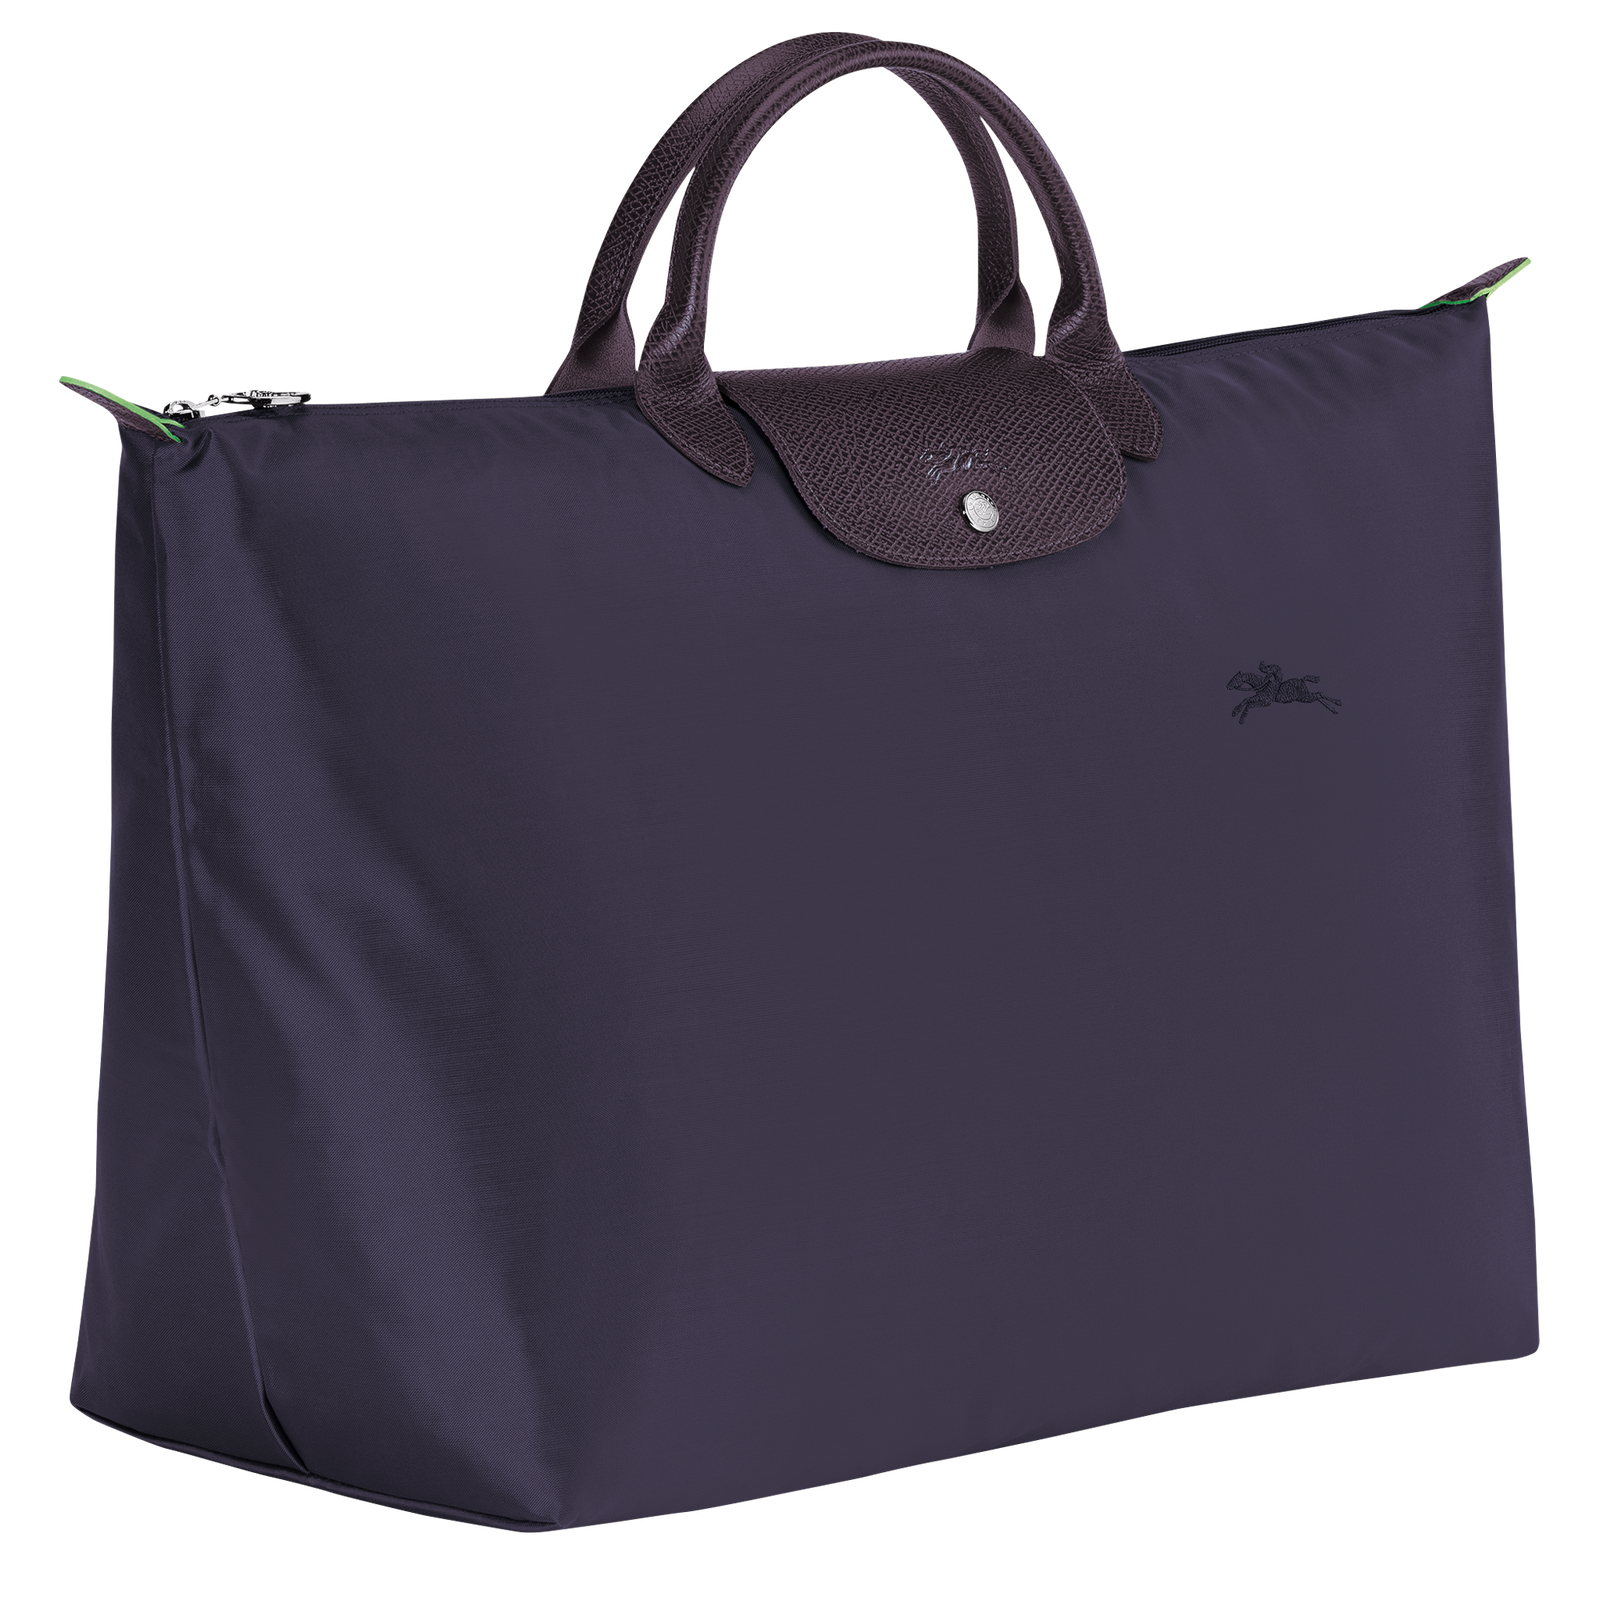 Le Pliage Green Travel bag S, Bilberry